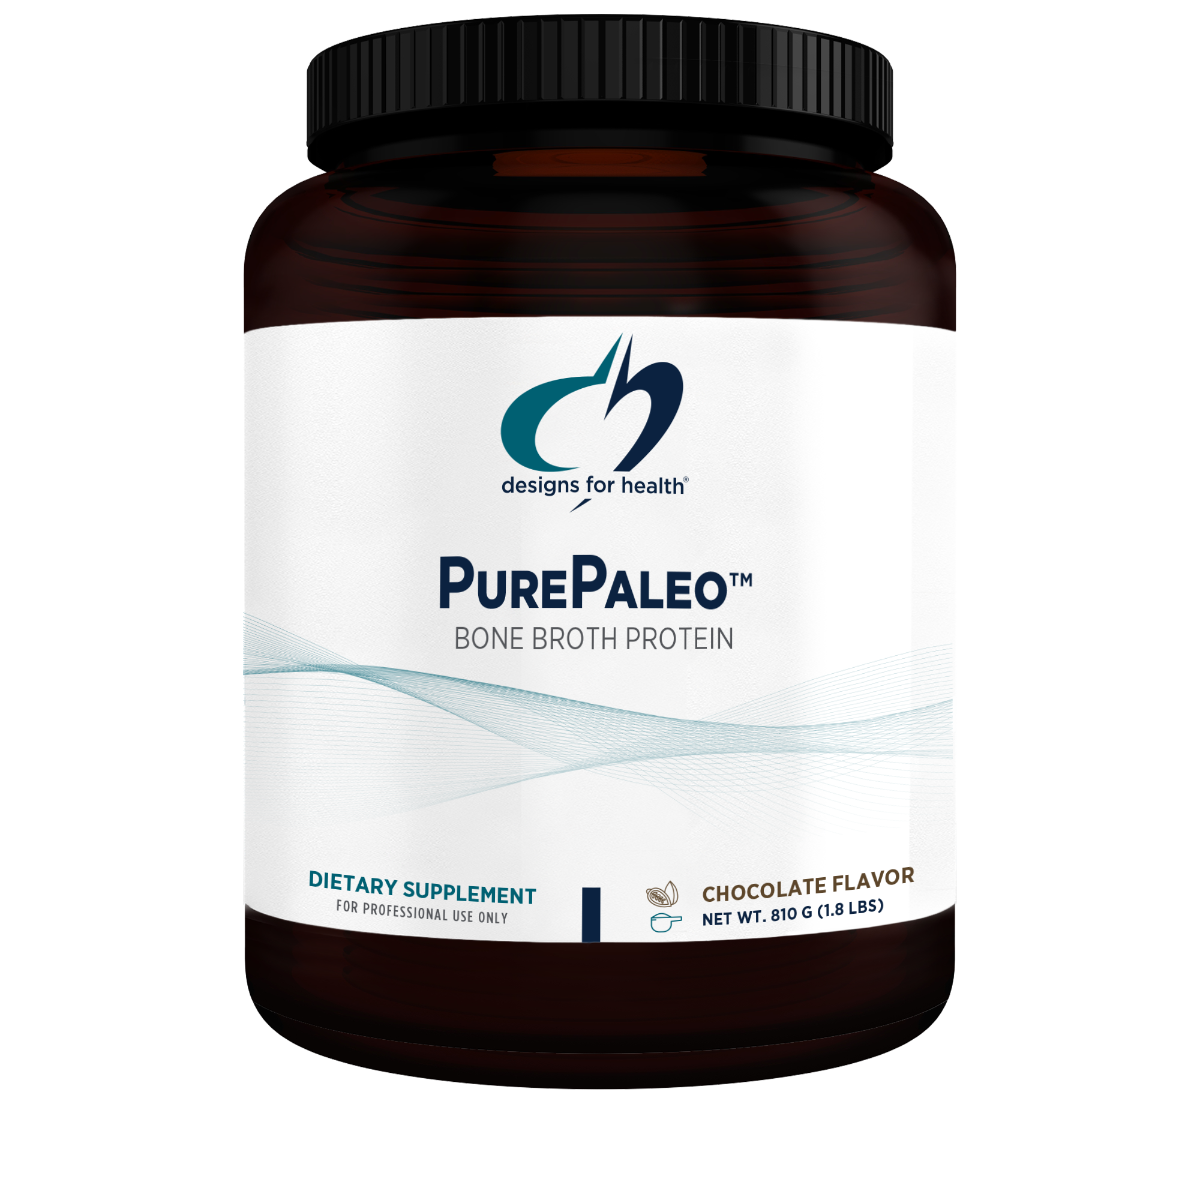 PurePaleo Protein - Designs for Health (DFH)